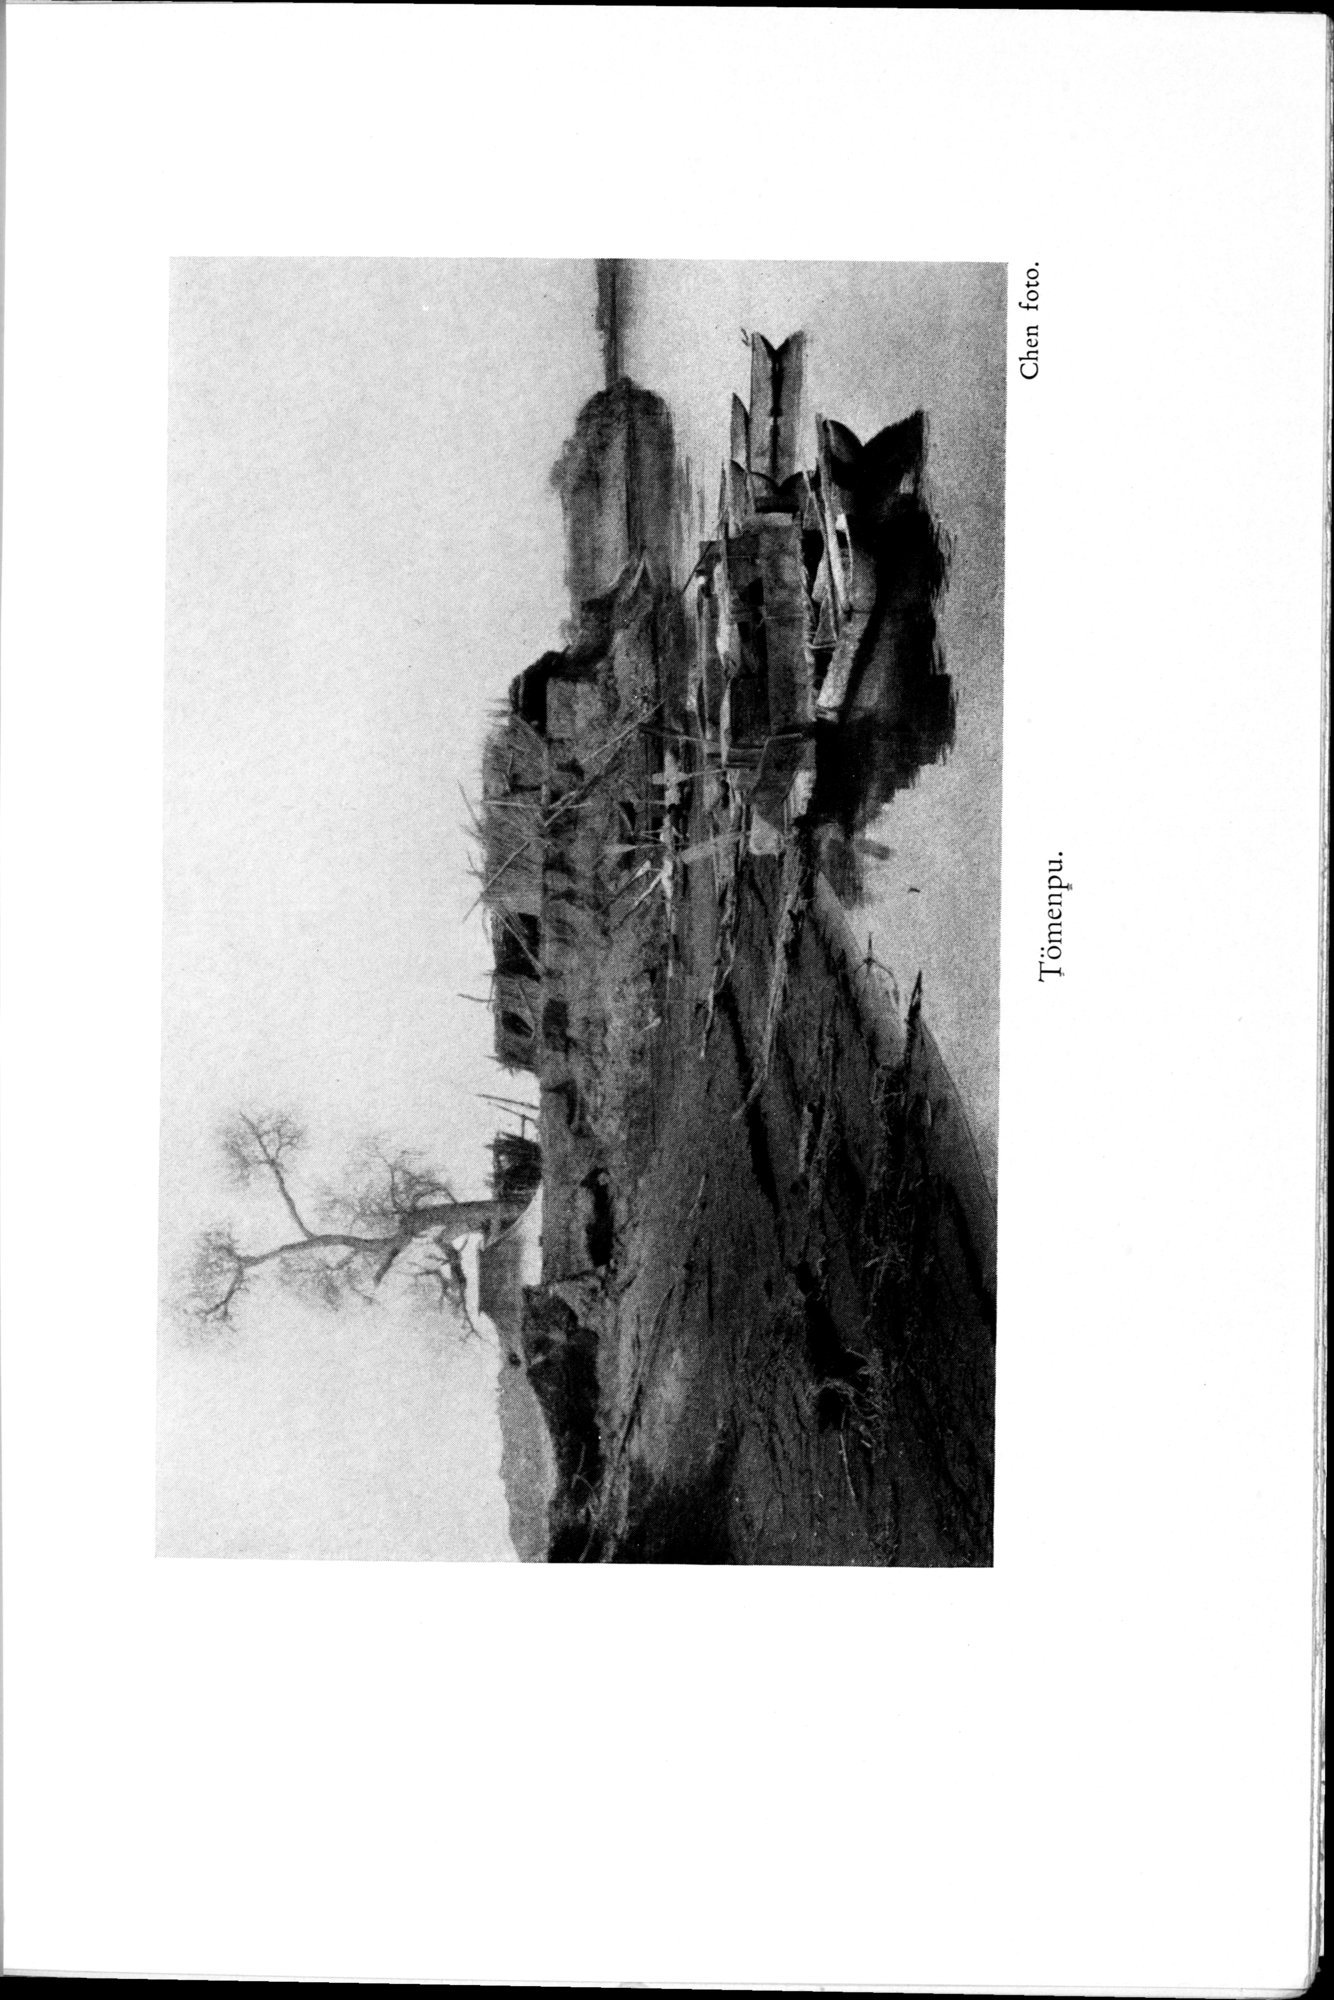 Den Vandrande Sjön : vol.1 / Page 85 (Grayscale High Resolution Image)